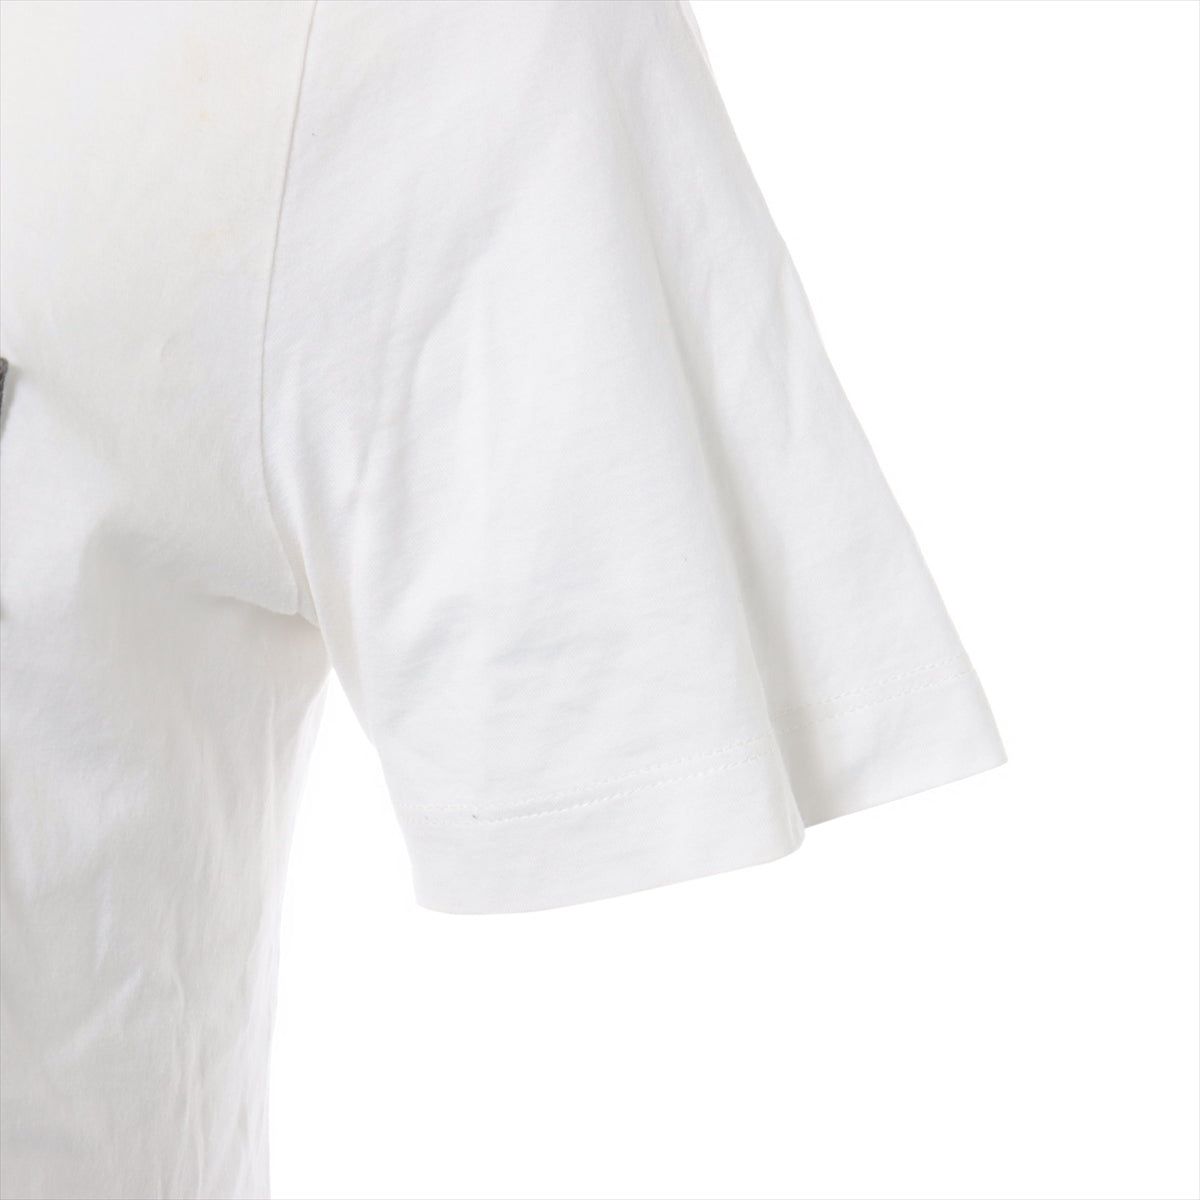 Louis Vuitton 14AW Cotton T-shirt M Men's White  RM142M LV Cup